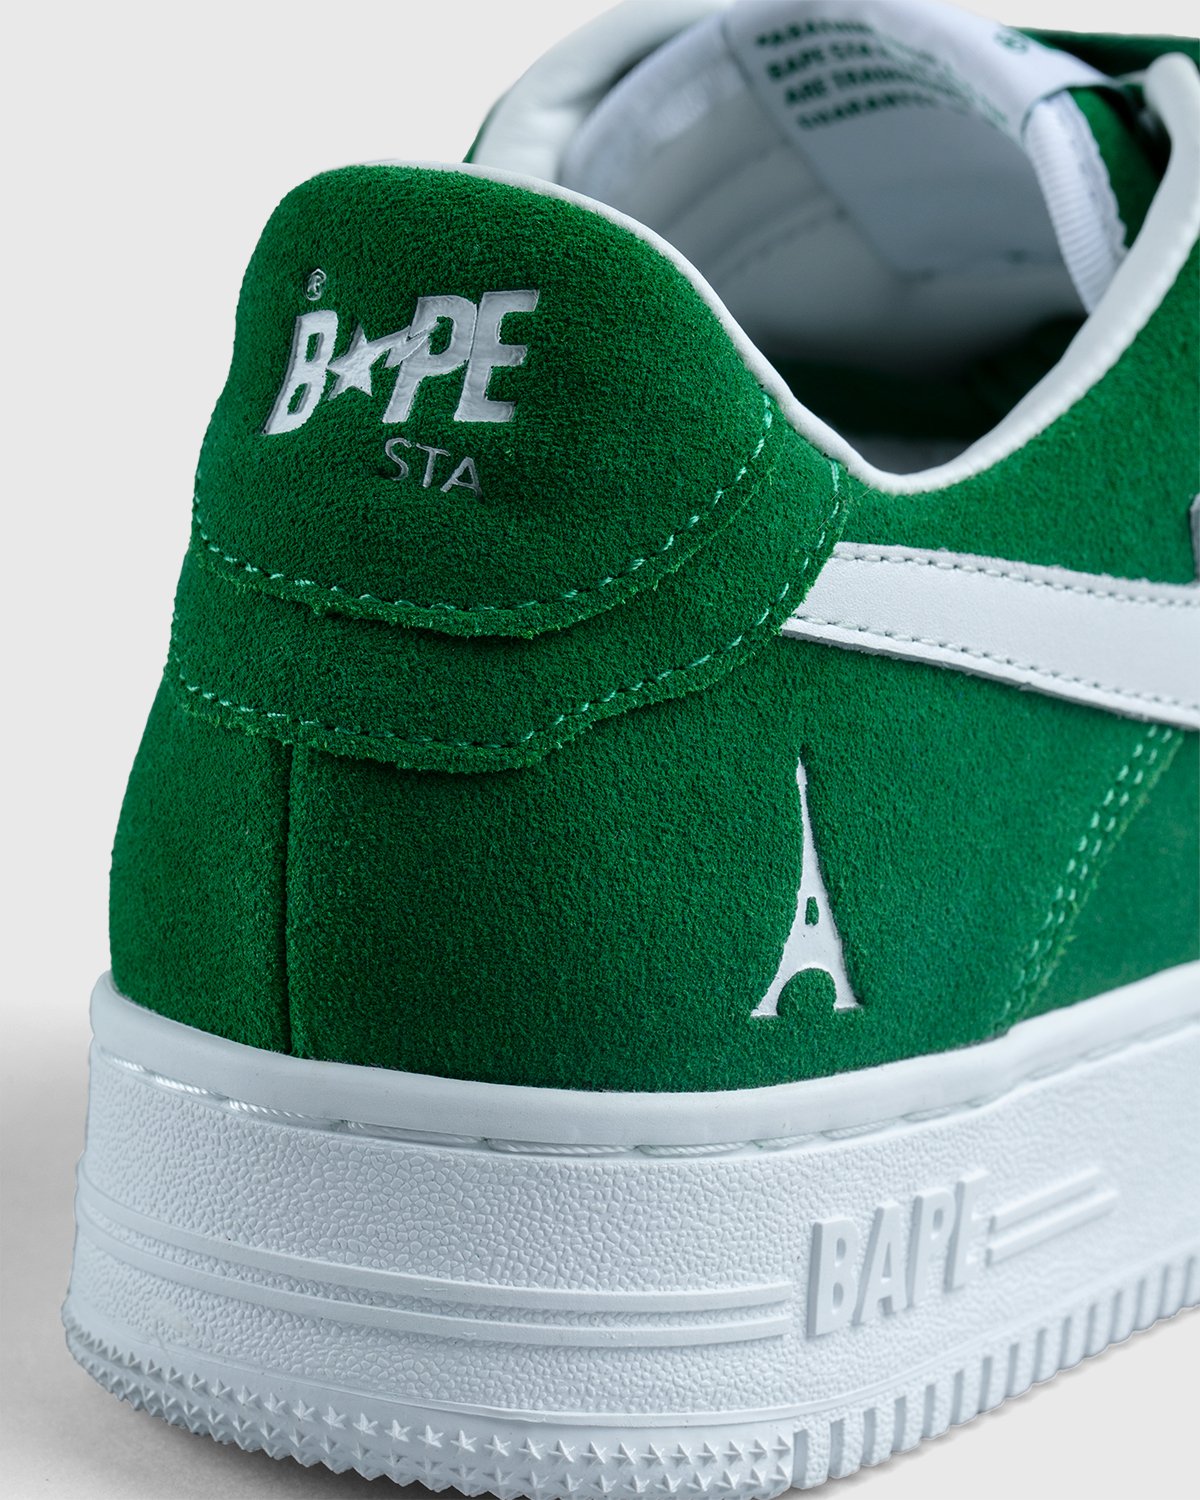 BAPE x Highsnobiety - BAPE STA Green - Footwear - Green - Image 7